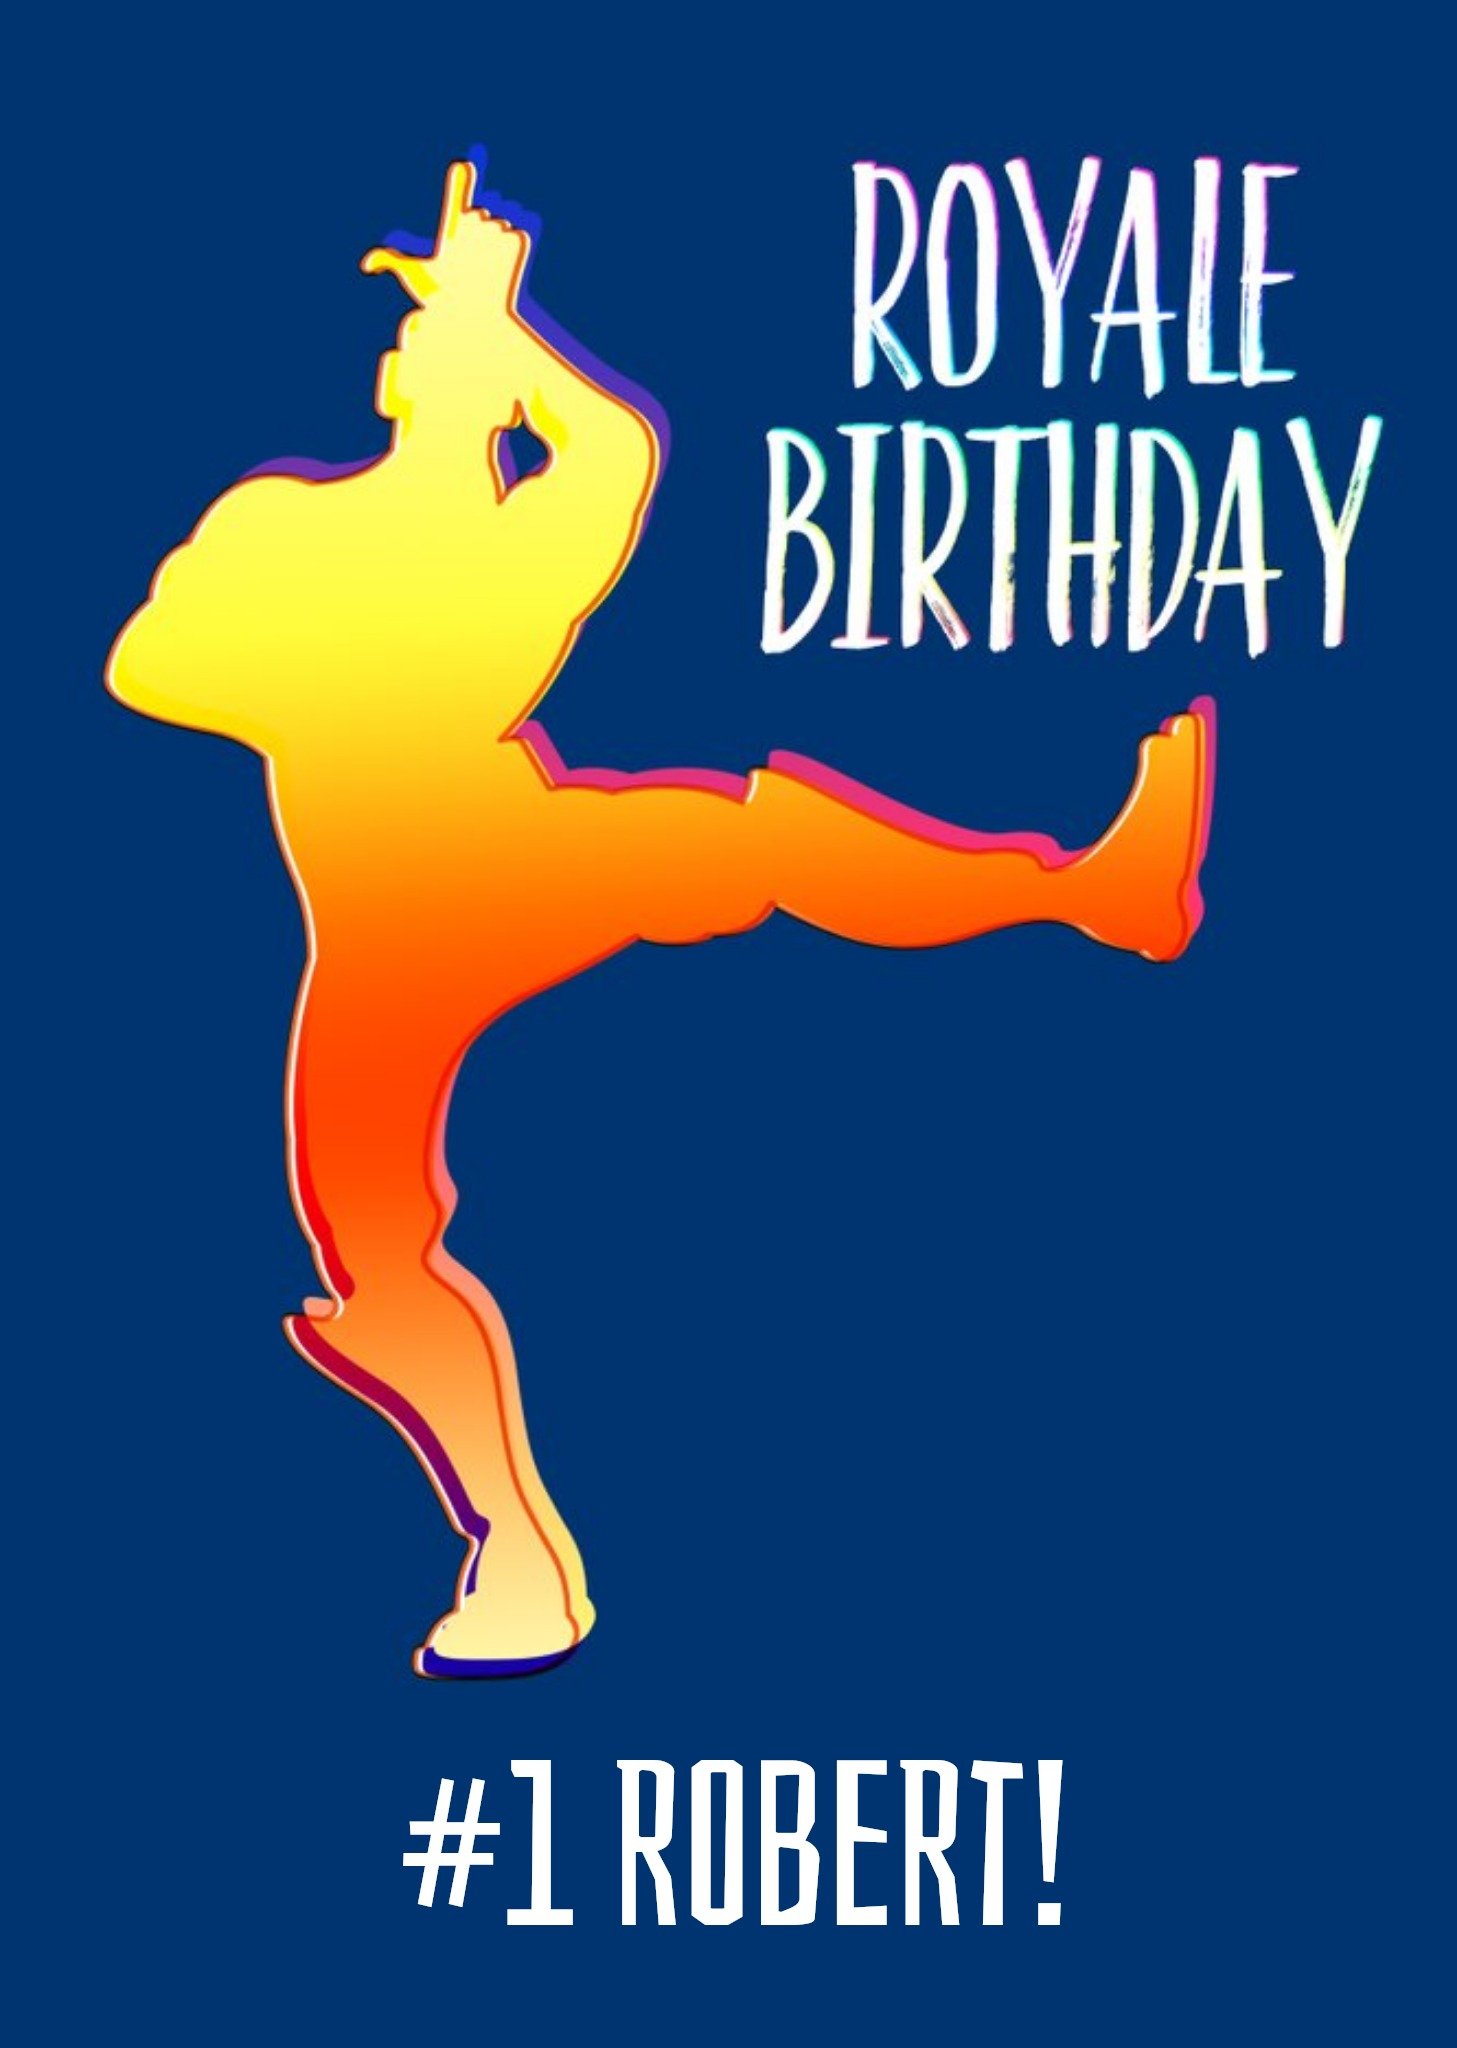 Moonpig Birthday Card Battle Royale Royale Birthday Ecard